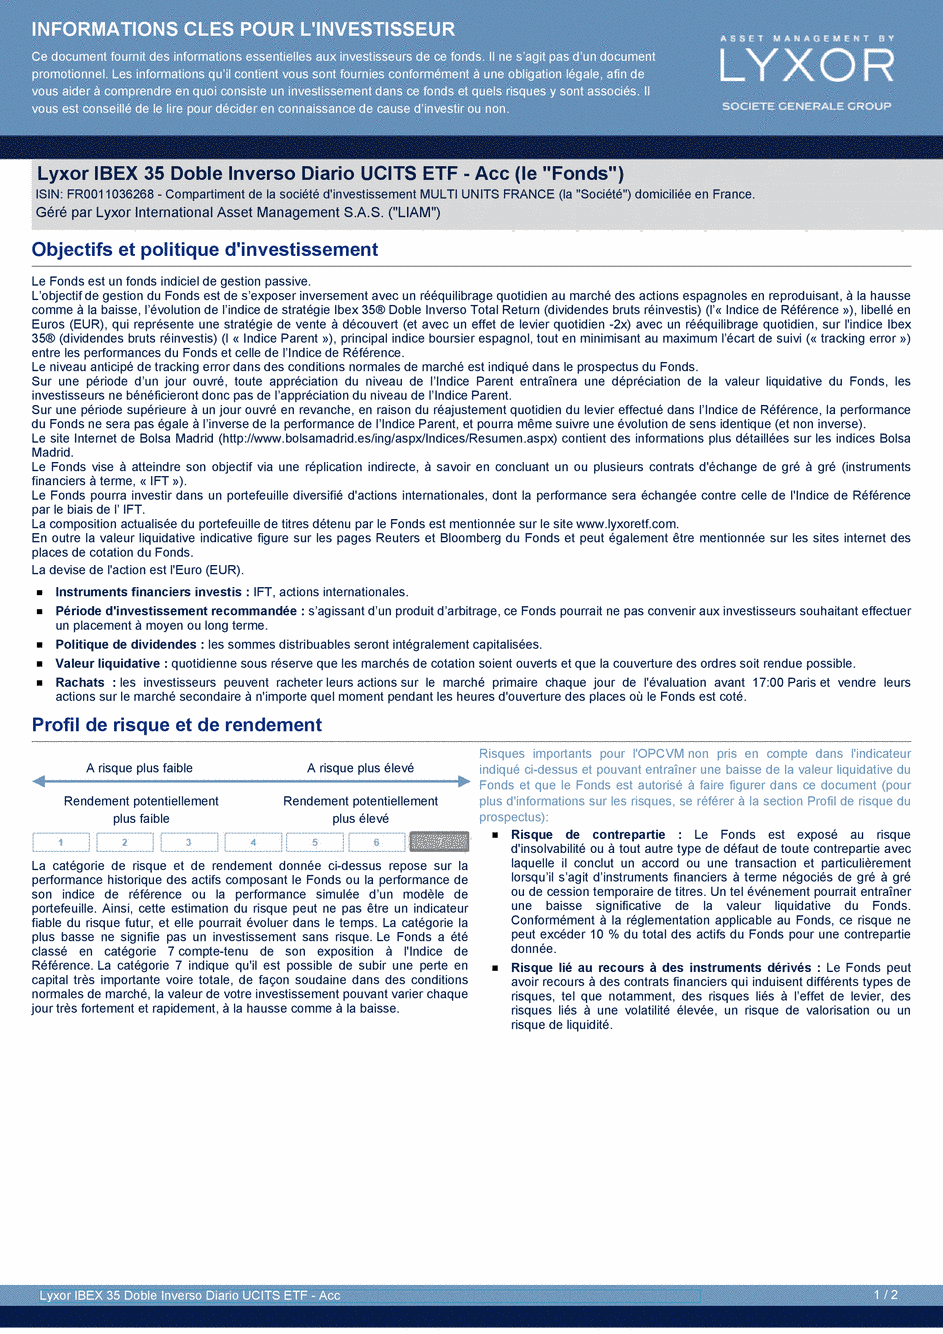 DICI Lyxor IBEX 35 Doble Inverso Diario UCITS ETF - Acc - 19/02/2021 - Français